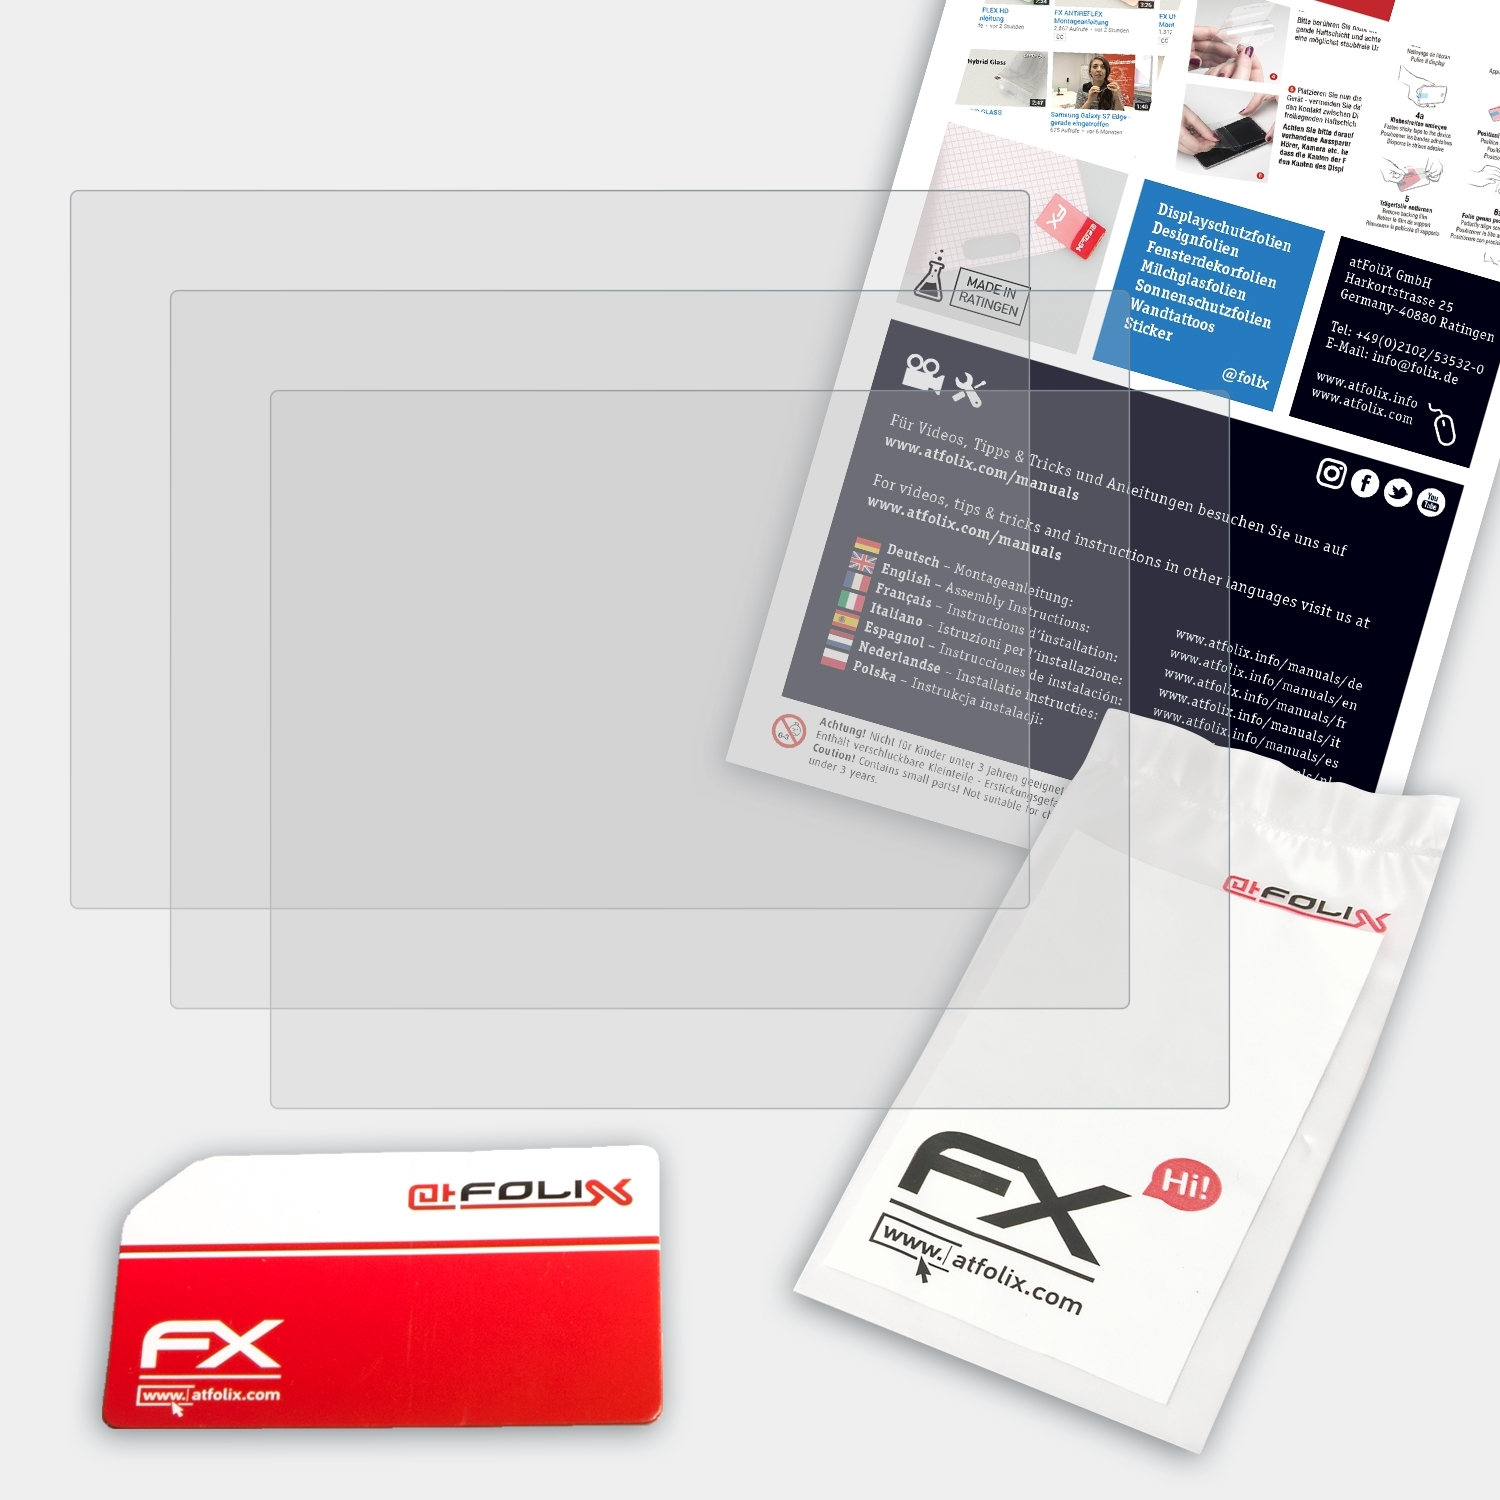 ATFOLIX 3x AZ362) Displayschutz(für PixPro FX-Antireflex Kodak